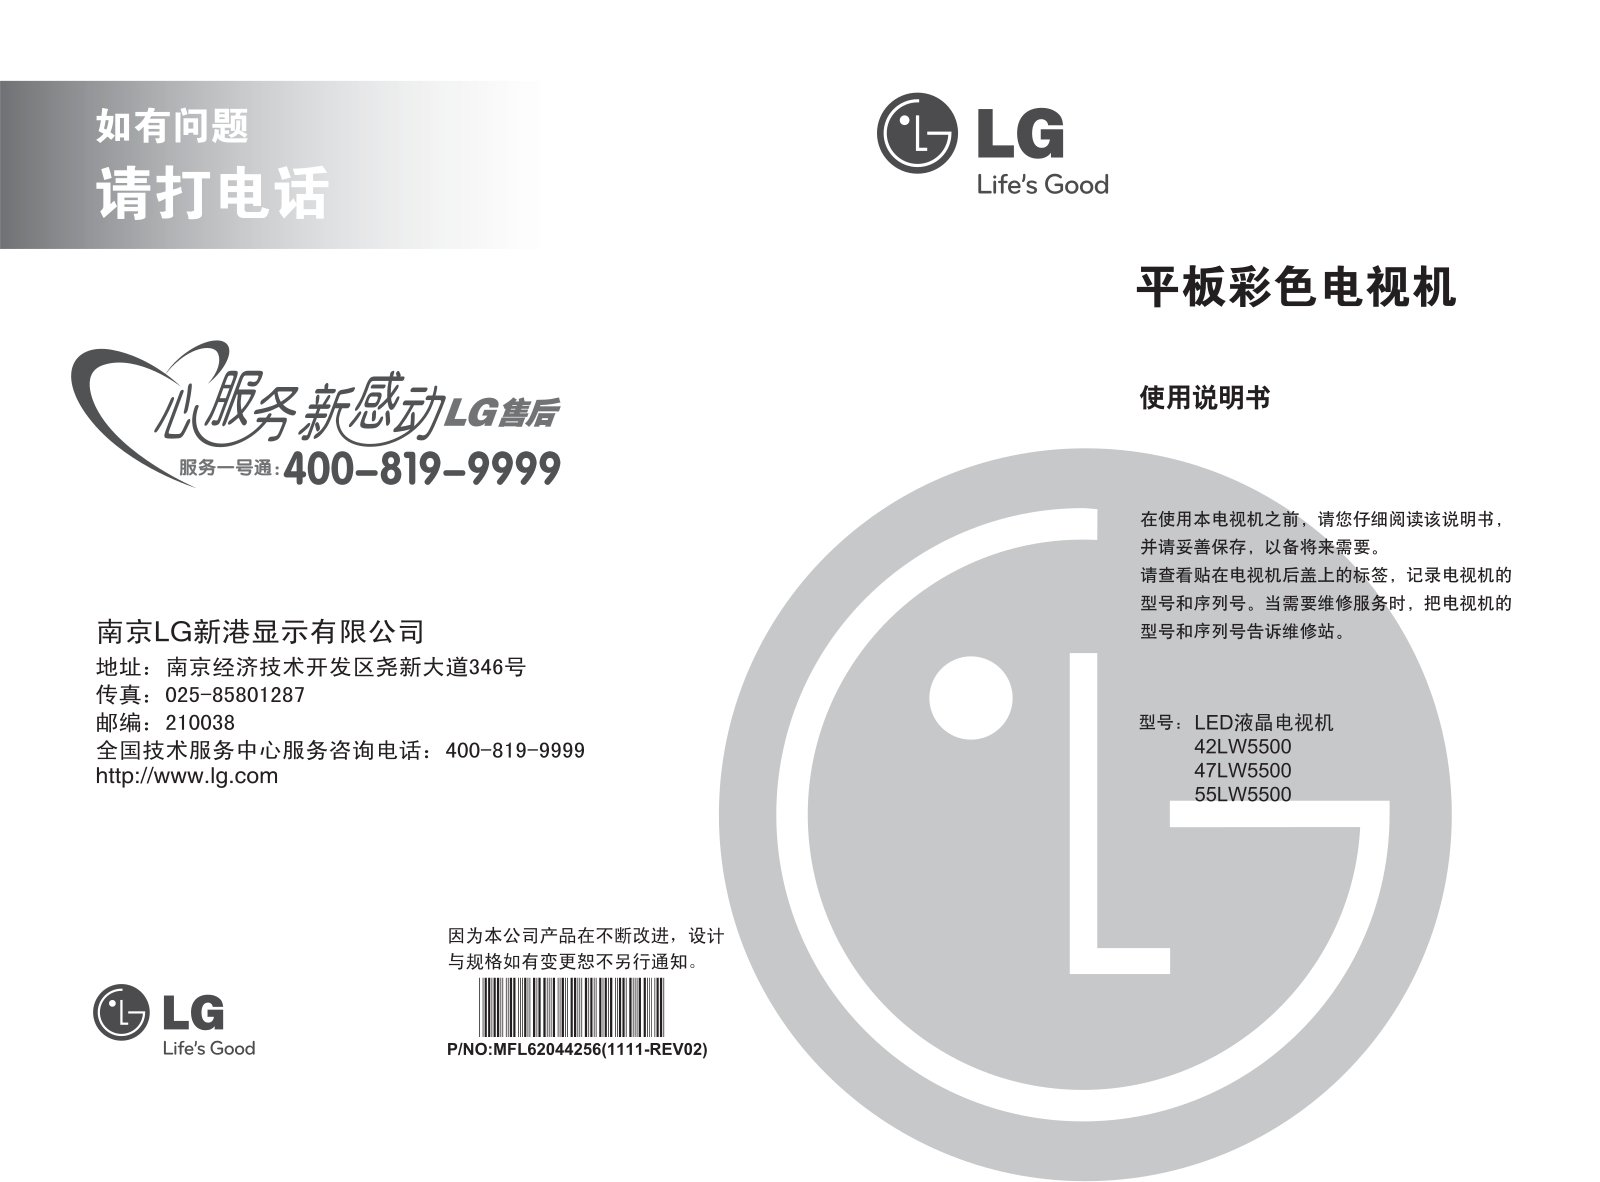 Lg 55LW5500, 47LW5500, 42LW5500 User Manual